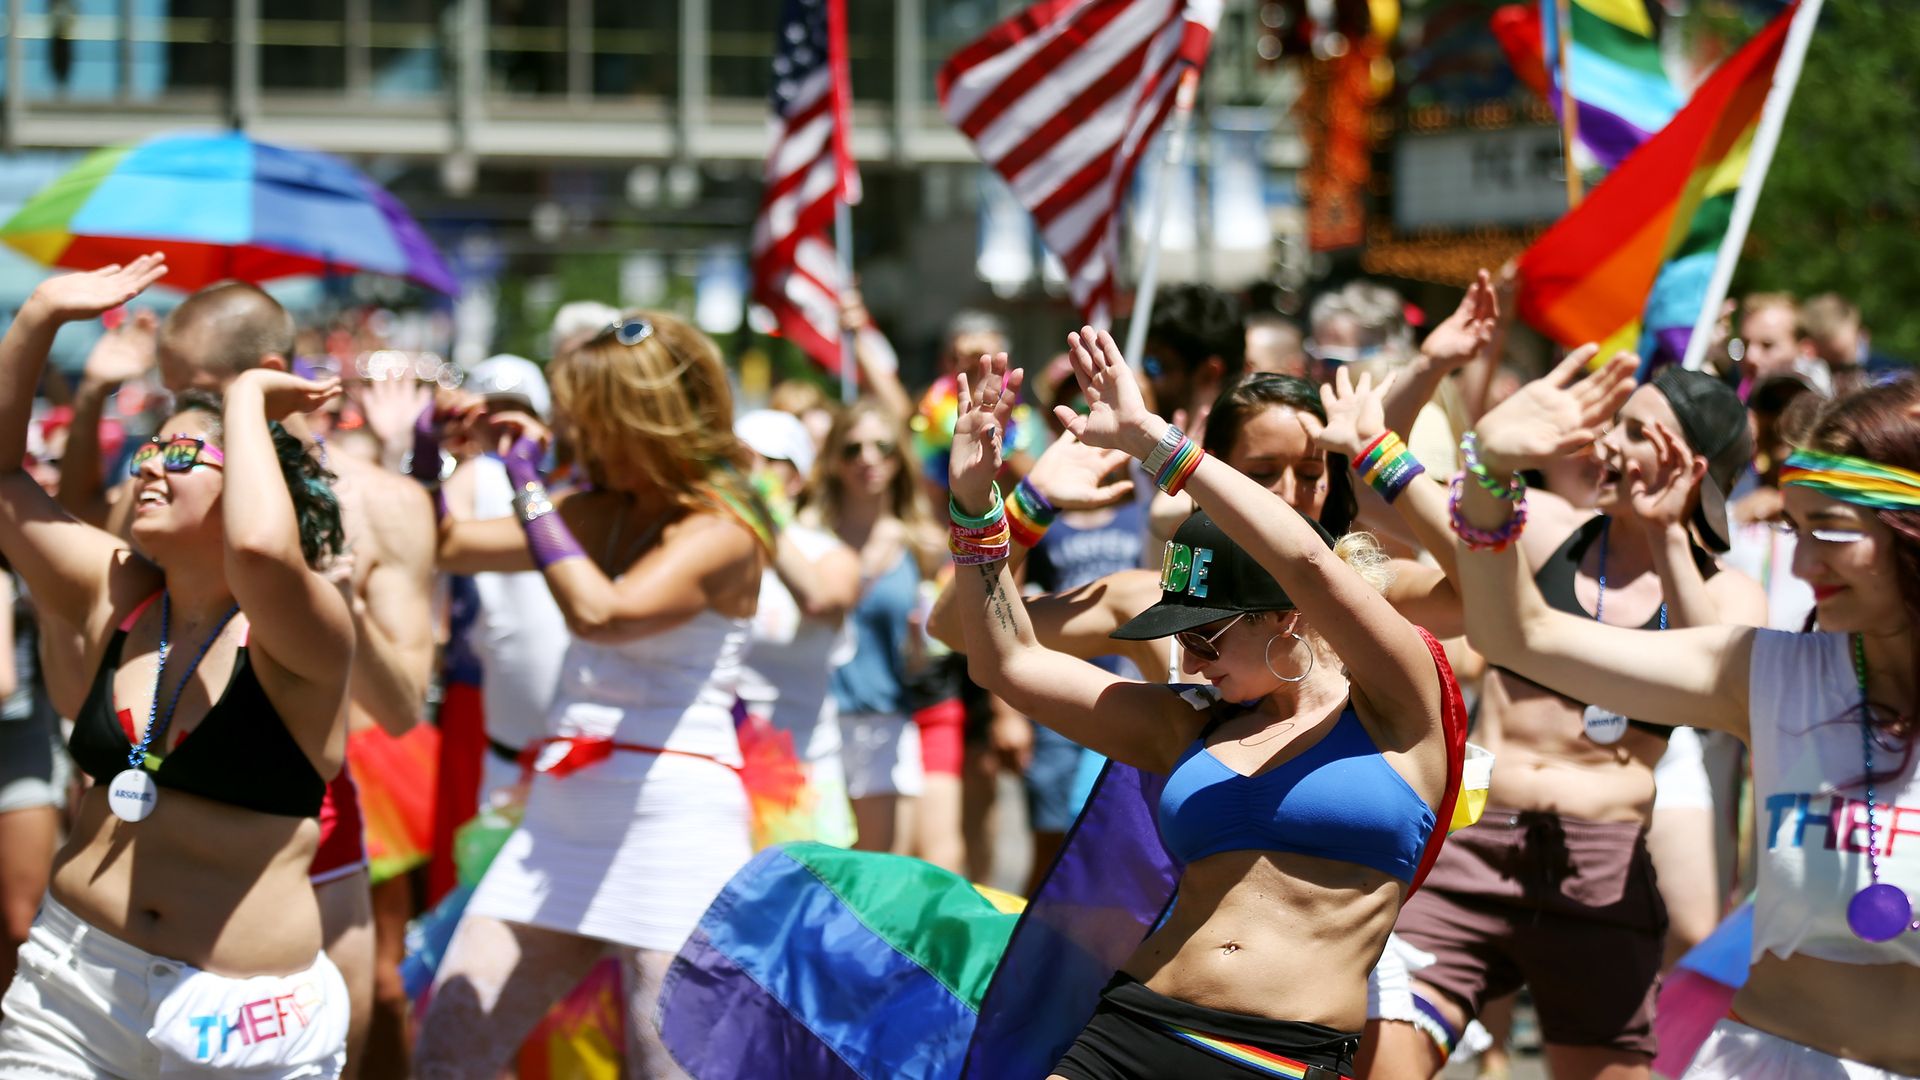 A group of people dancing in the street waving pride flags.